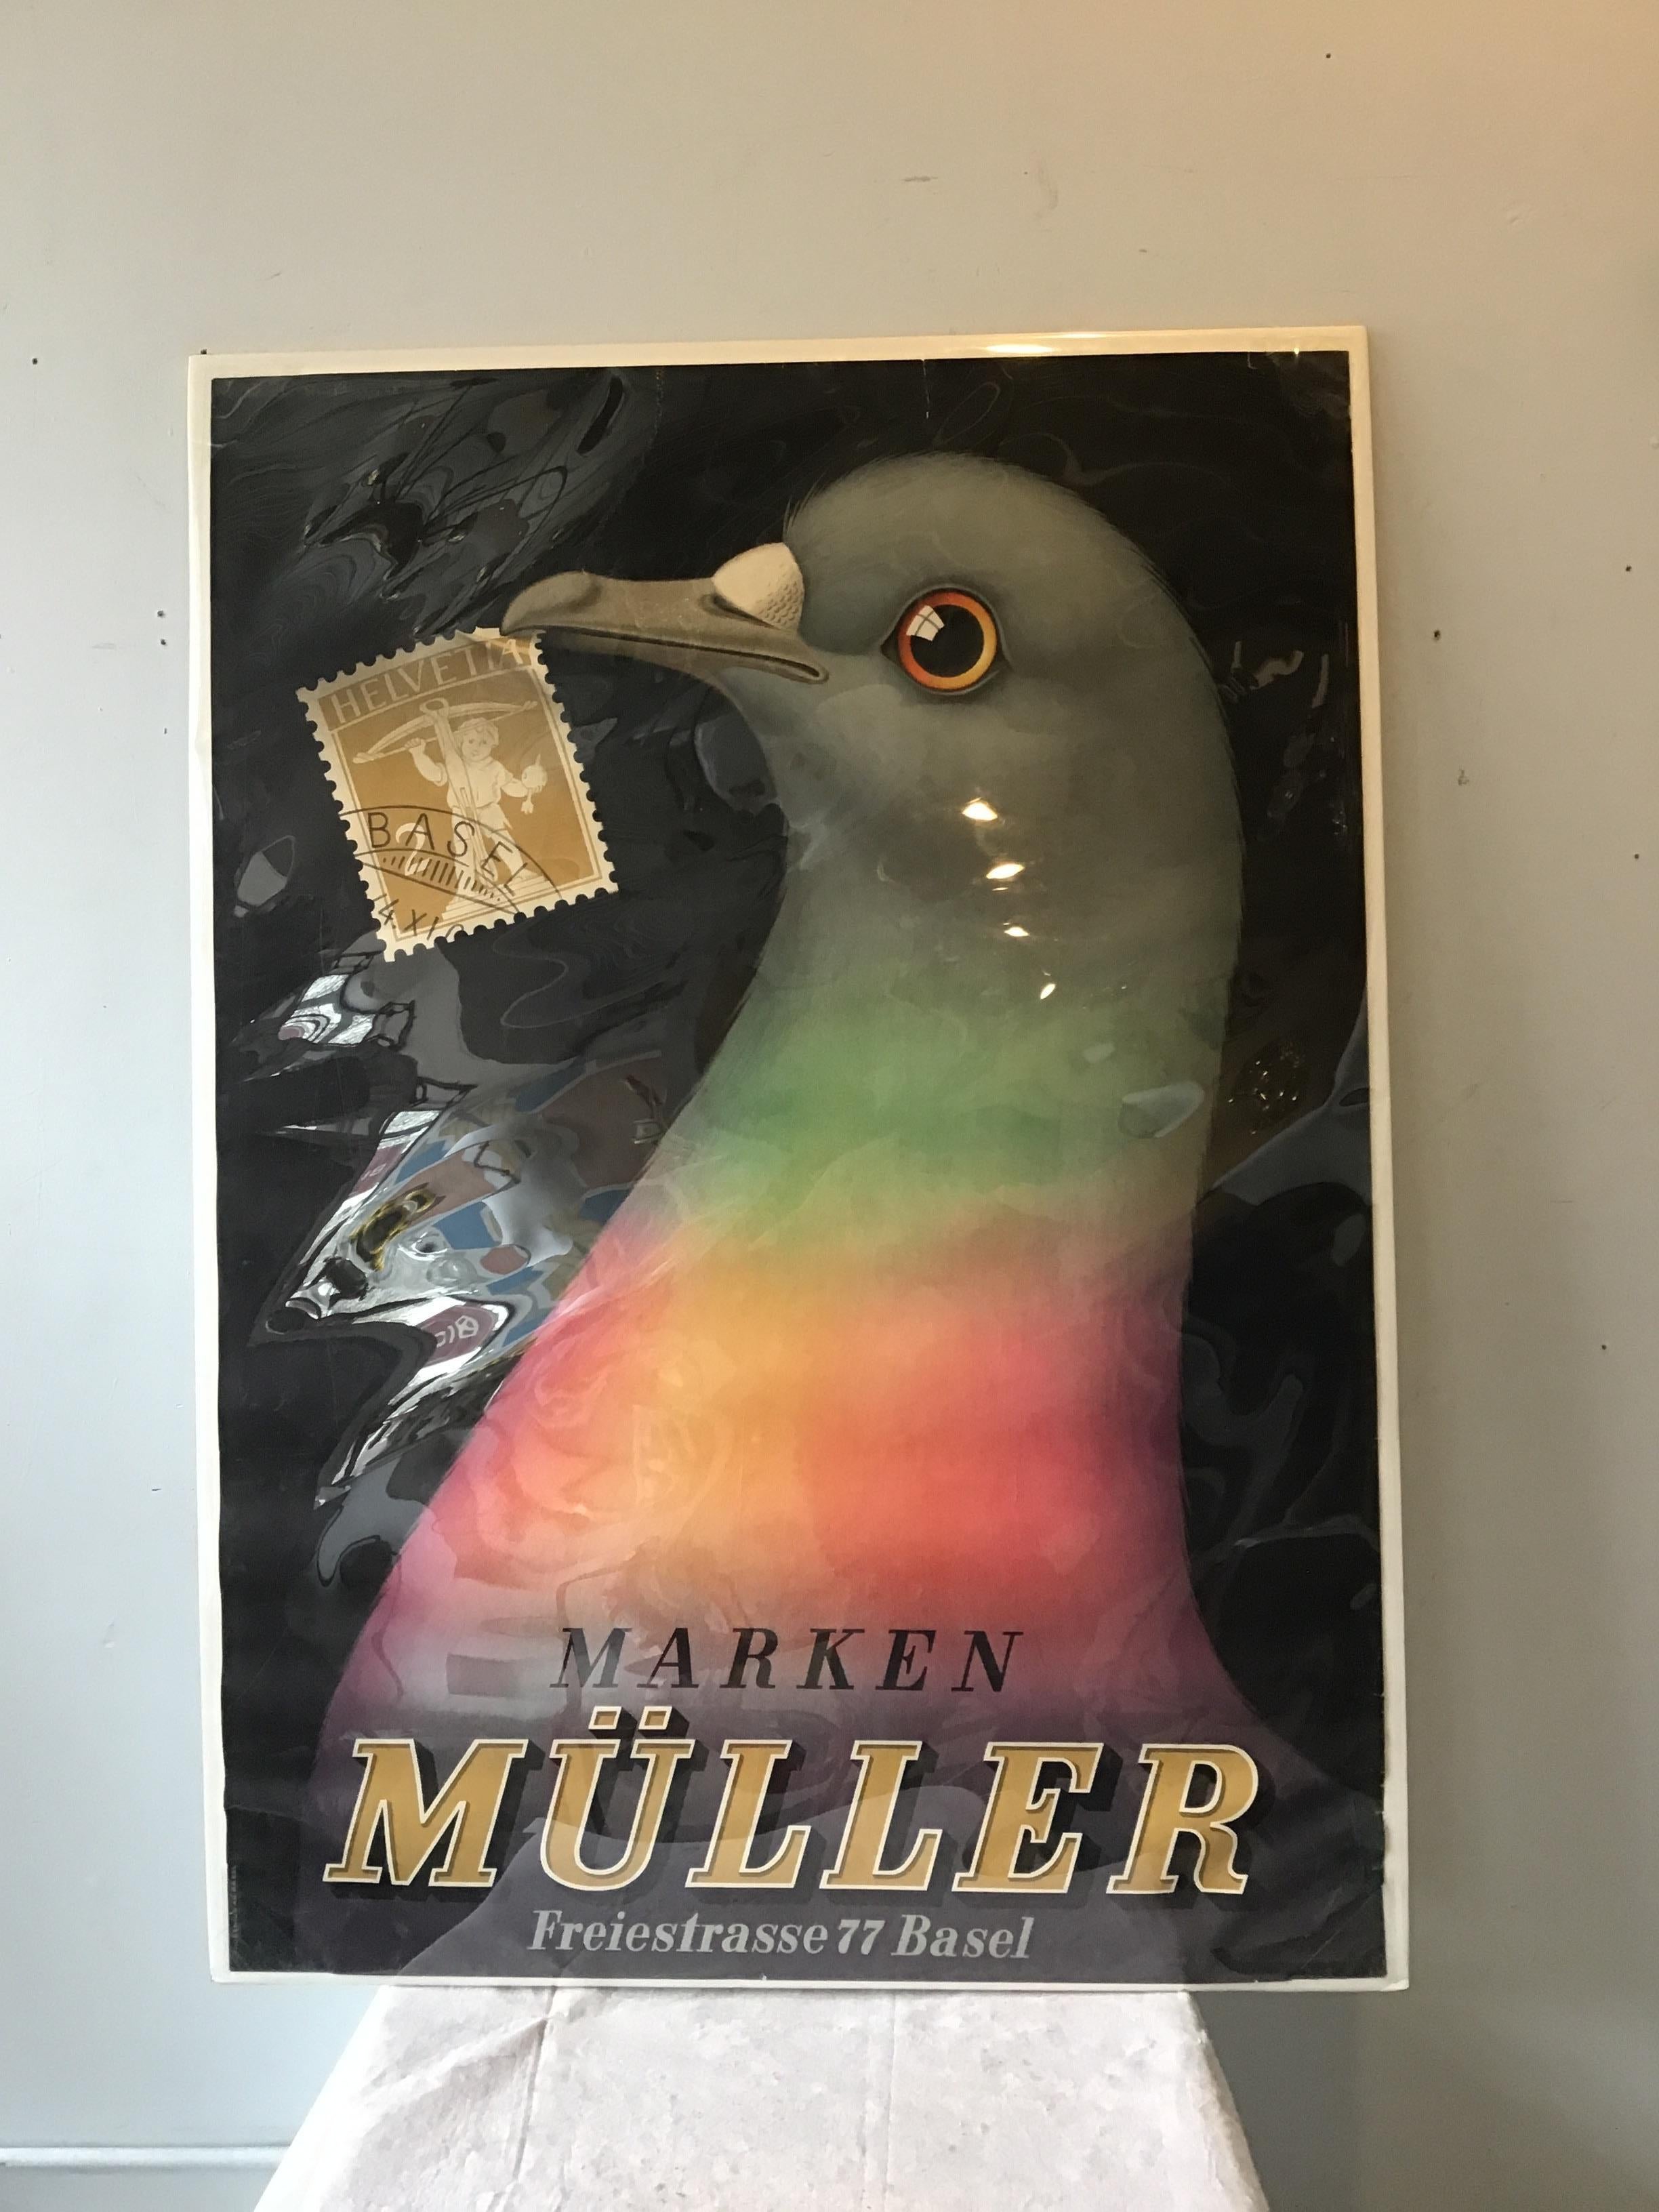 1948 Advertising poster for the Swiss philatelic store Marken Müller. Poster is under cellophane.